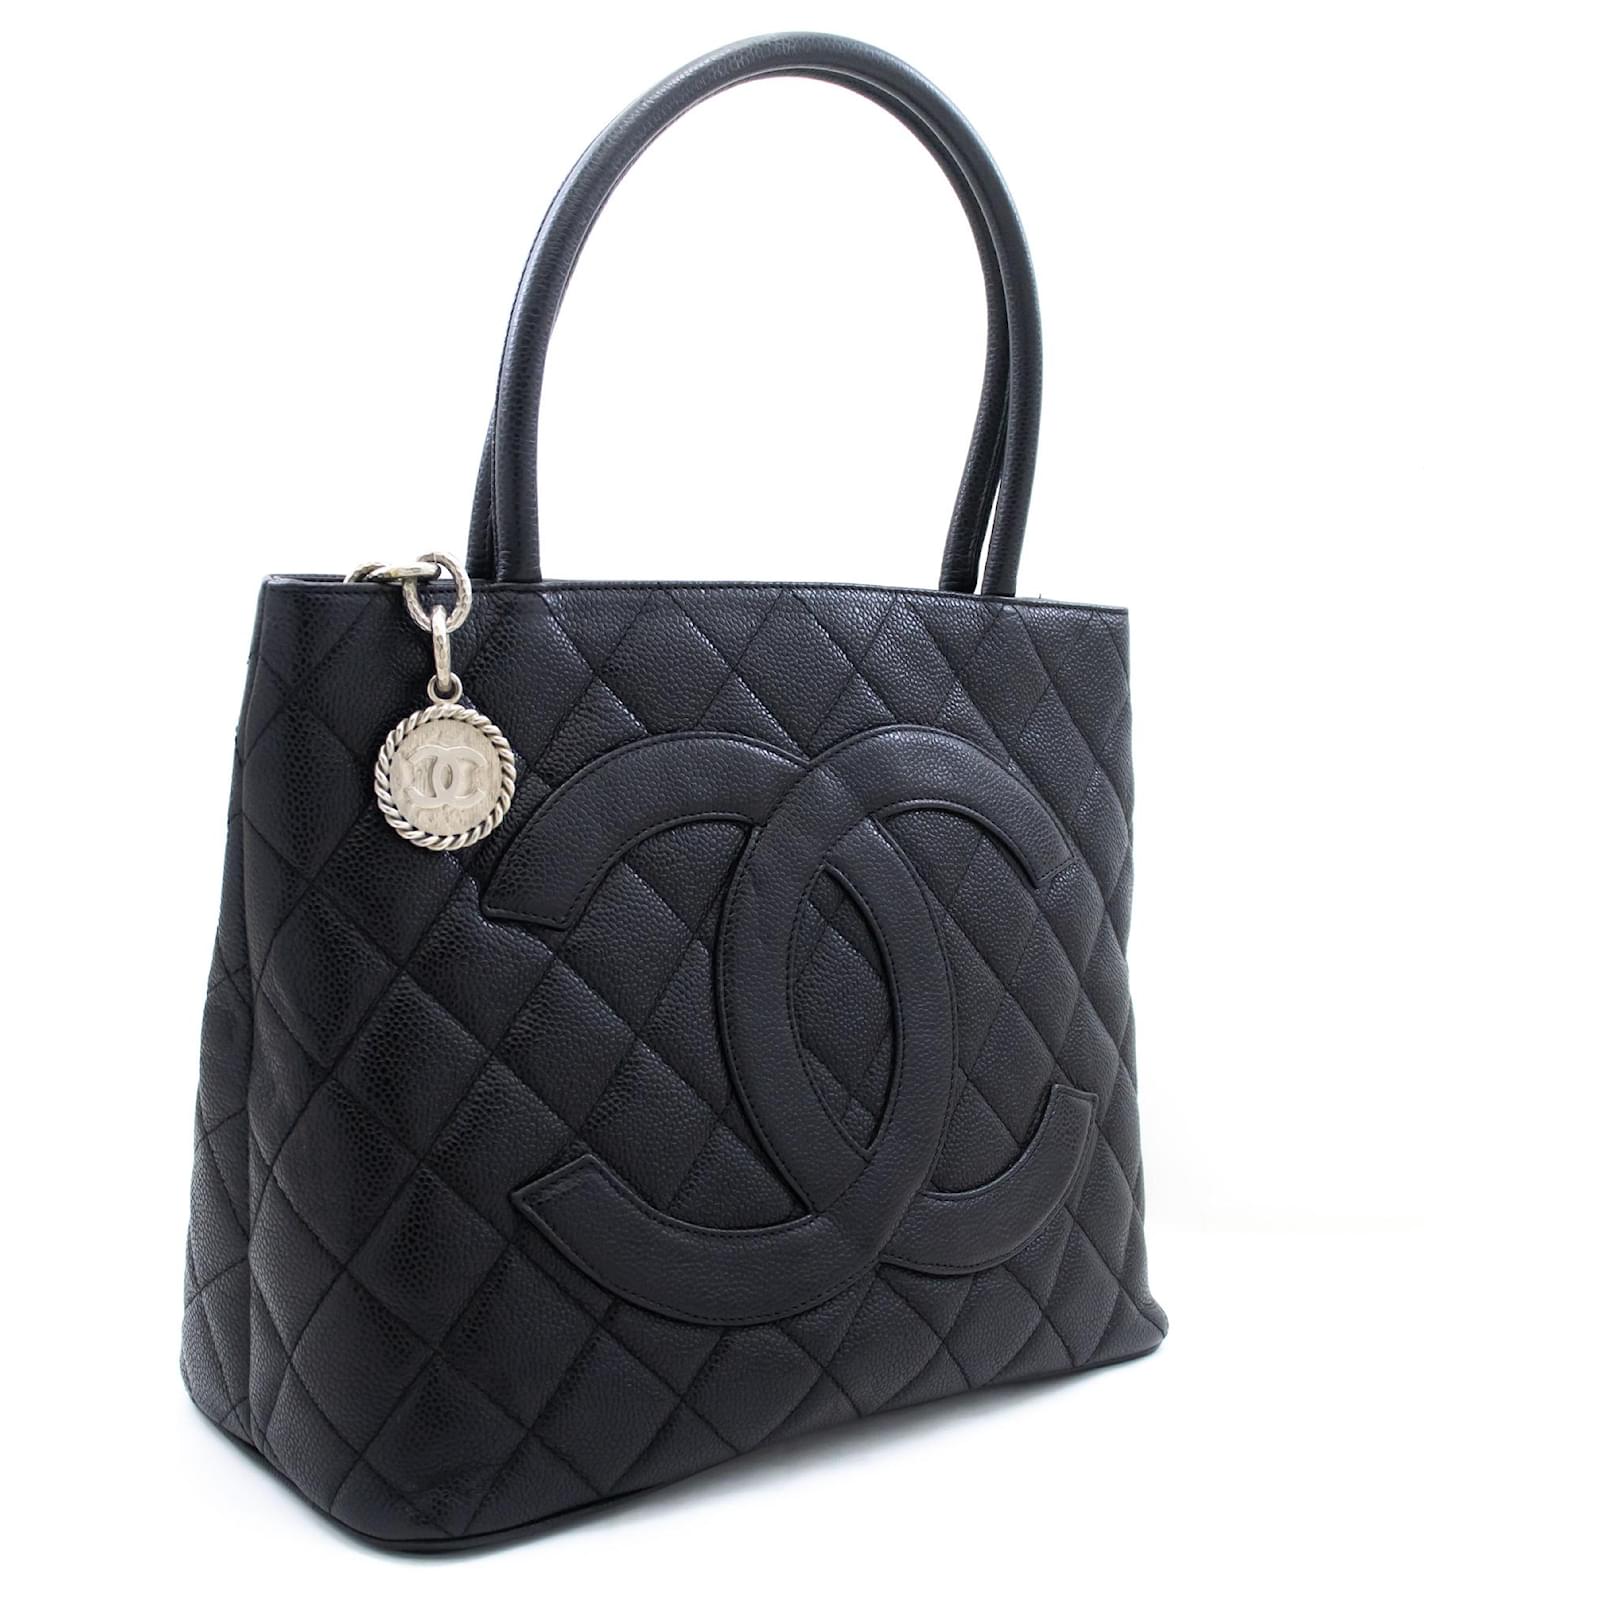 Chanel Caviar Medallion Tote, Chanel Handbags